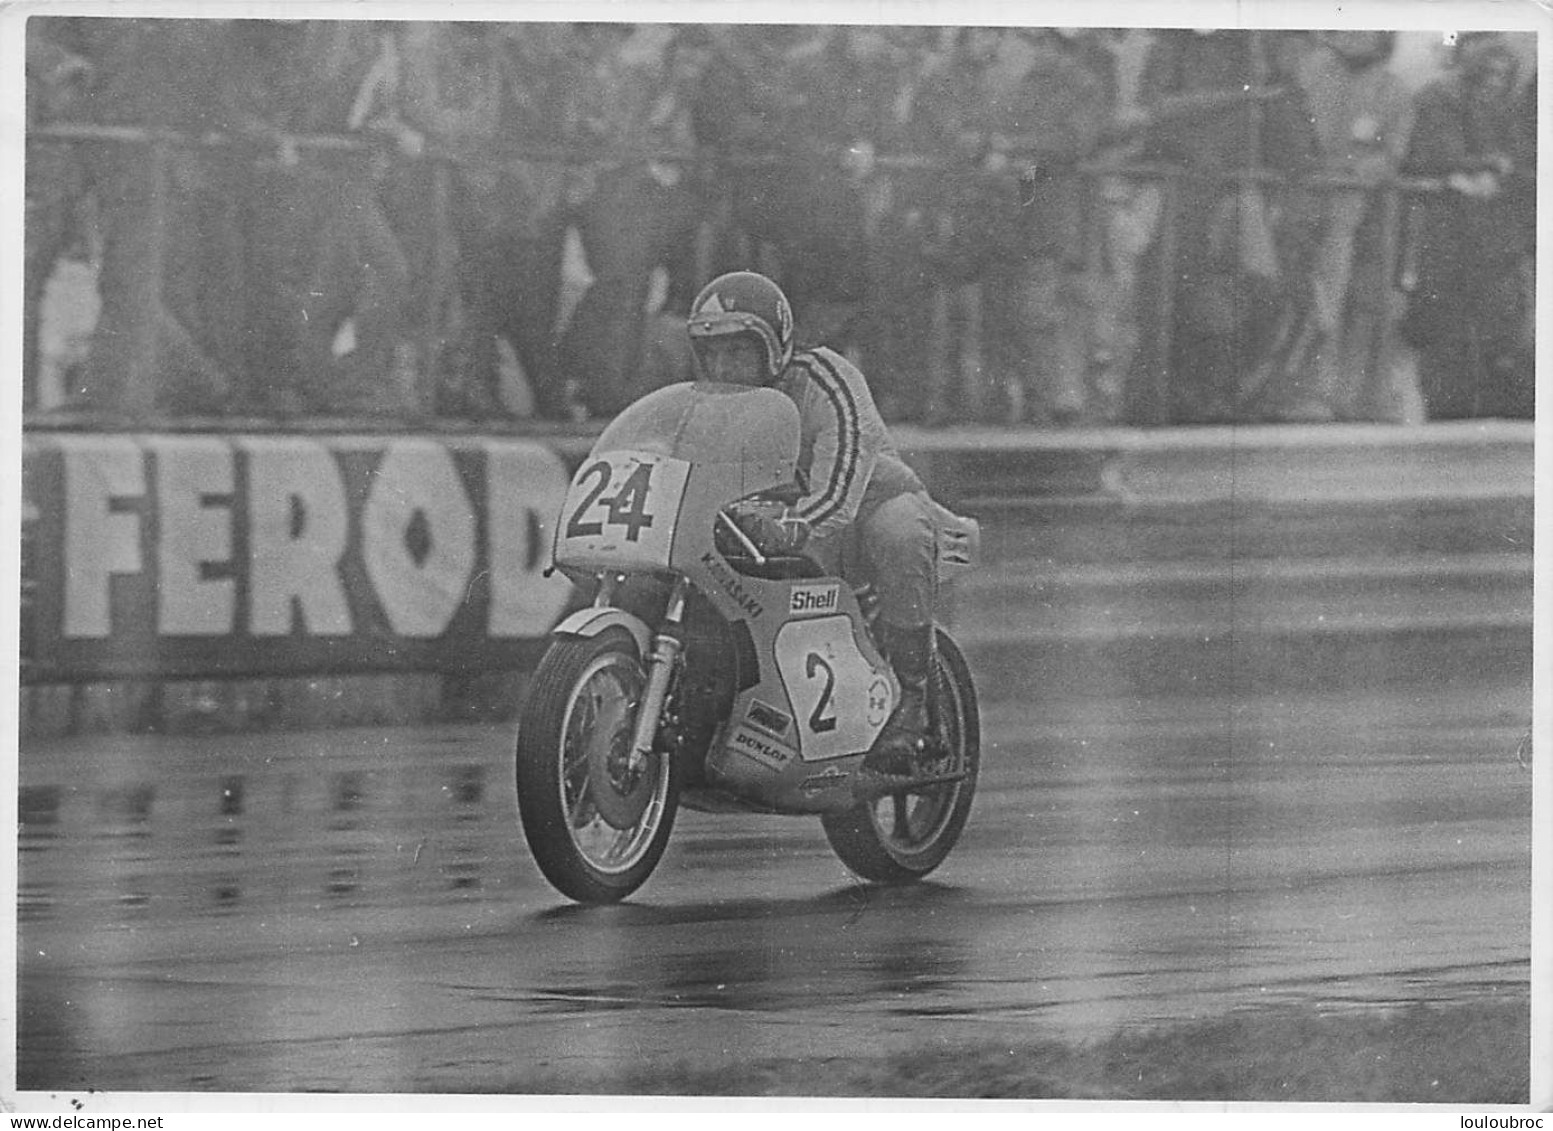 PILOTE  MOTO  PERCY TAIT  COURSE ANNEE 1974 KAWASAKI 500CC  RACE OF THE YEAR PHOTO DE PRESSE ORIGINALE 18X13CM - Sport